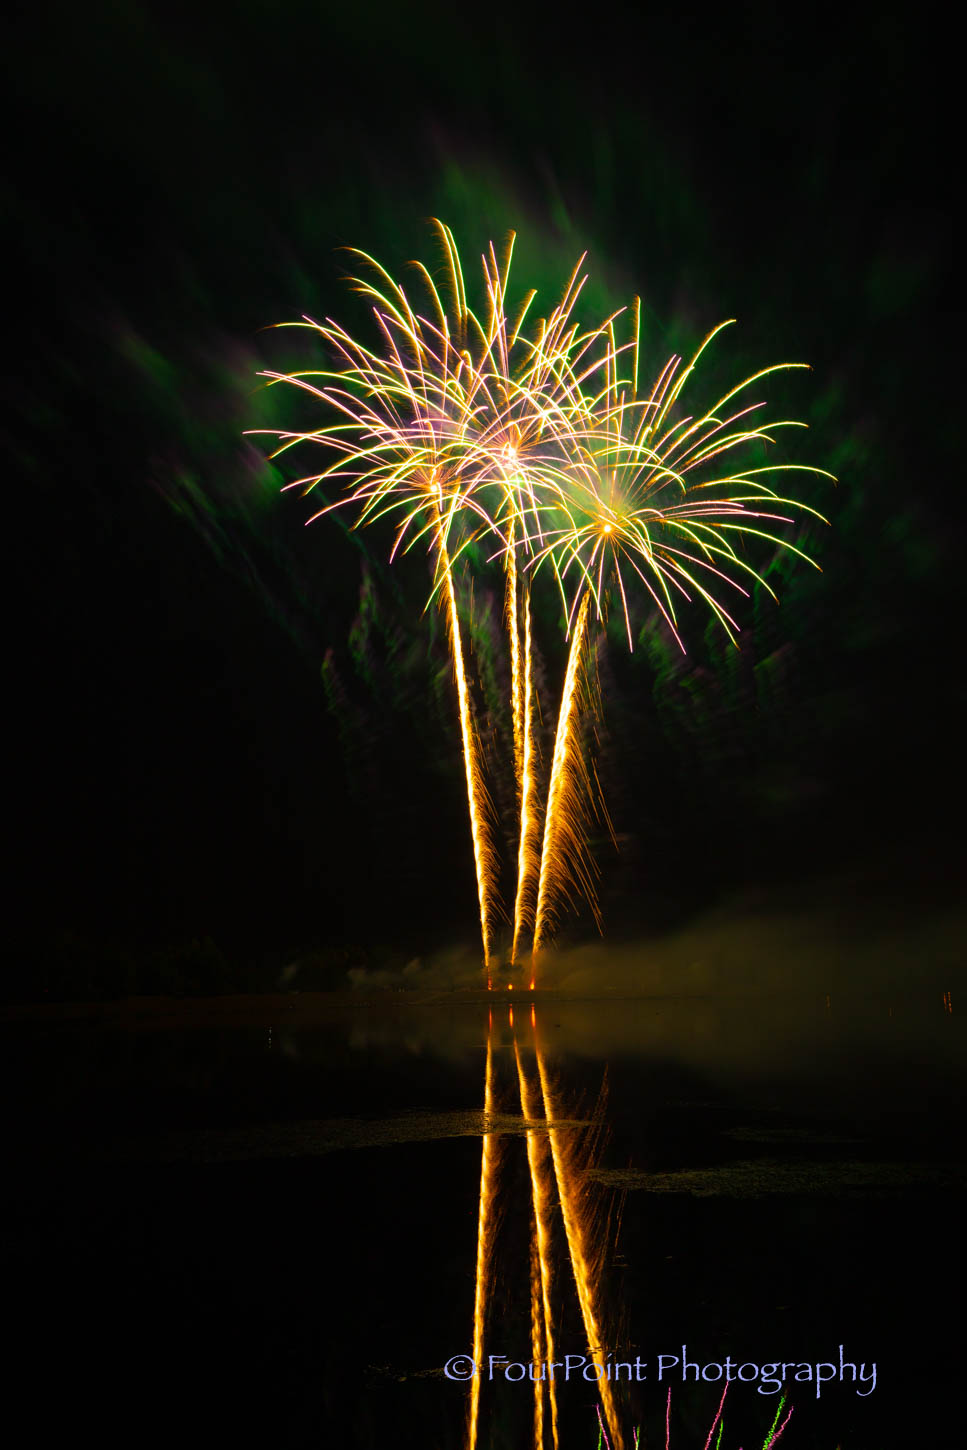 FourPoint Photography, Night Photo, Fireworks